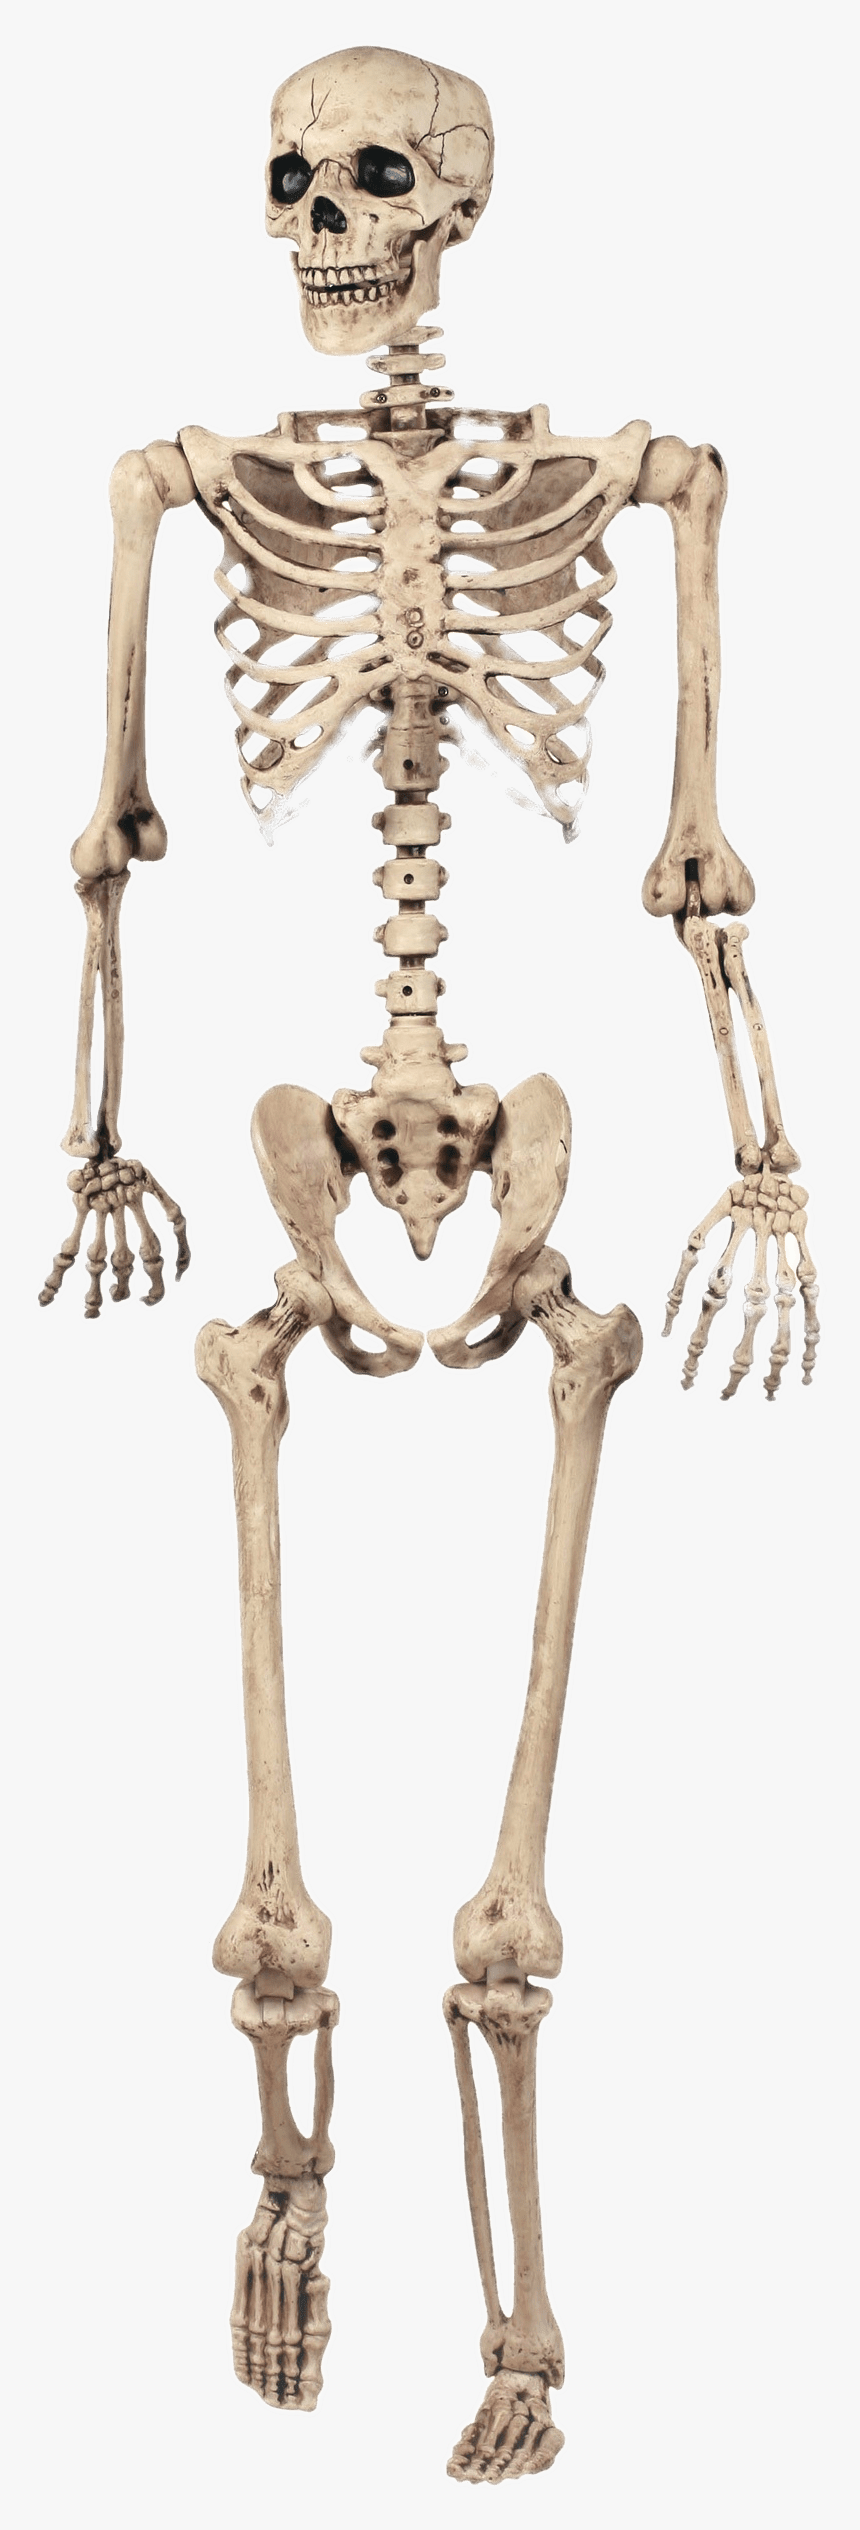 Png Of Human Skeleton - Halloween Decorations Skeleton, Transparent Png, Free Download